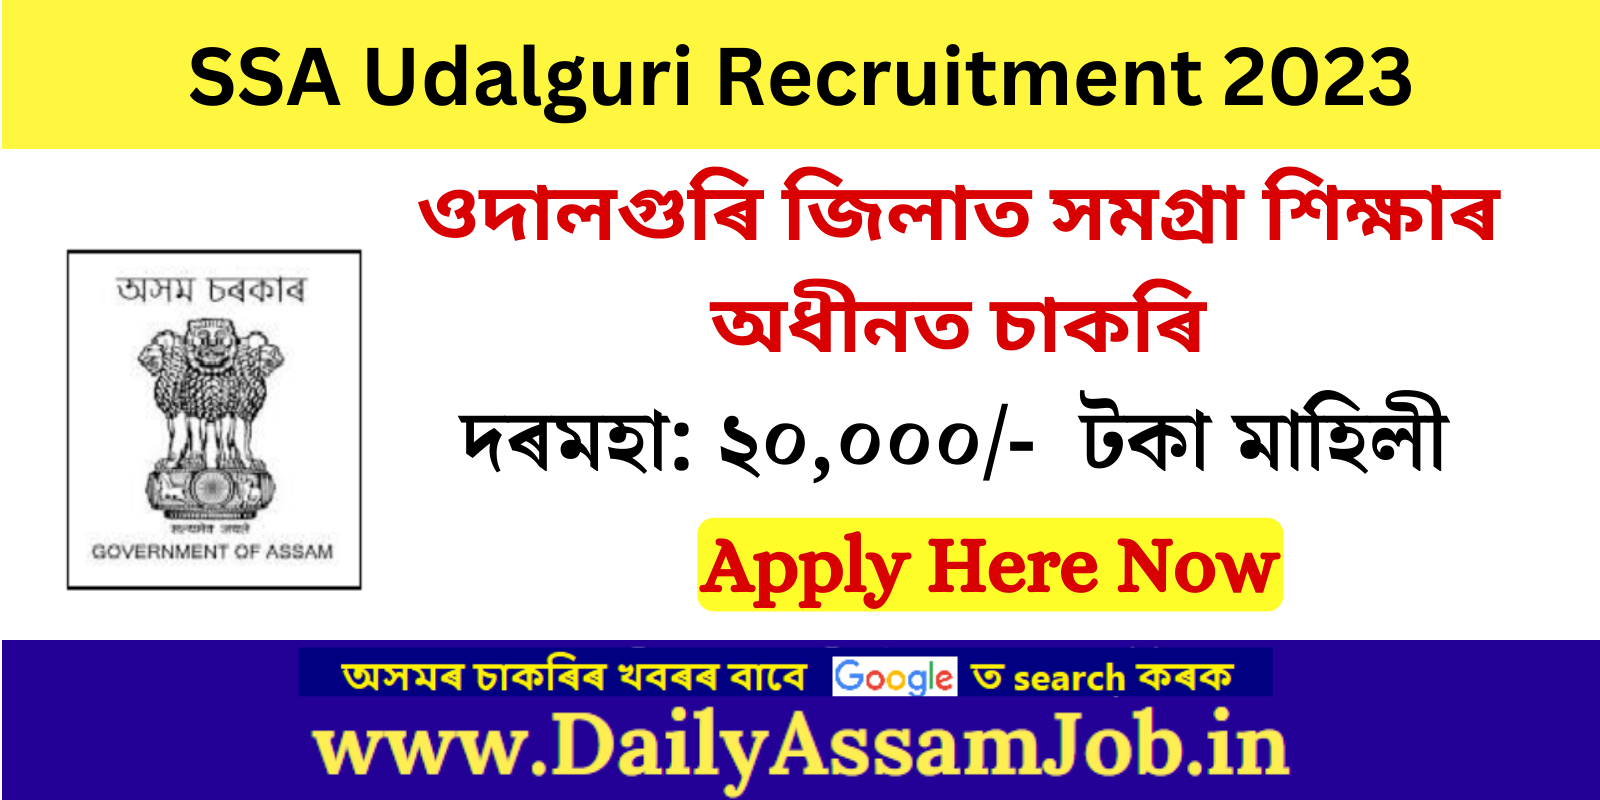 Assam Career :: SSA Udalguri Recruitment for Assistant Teacher Vacancy